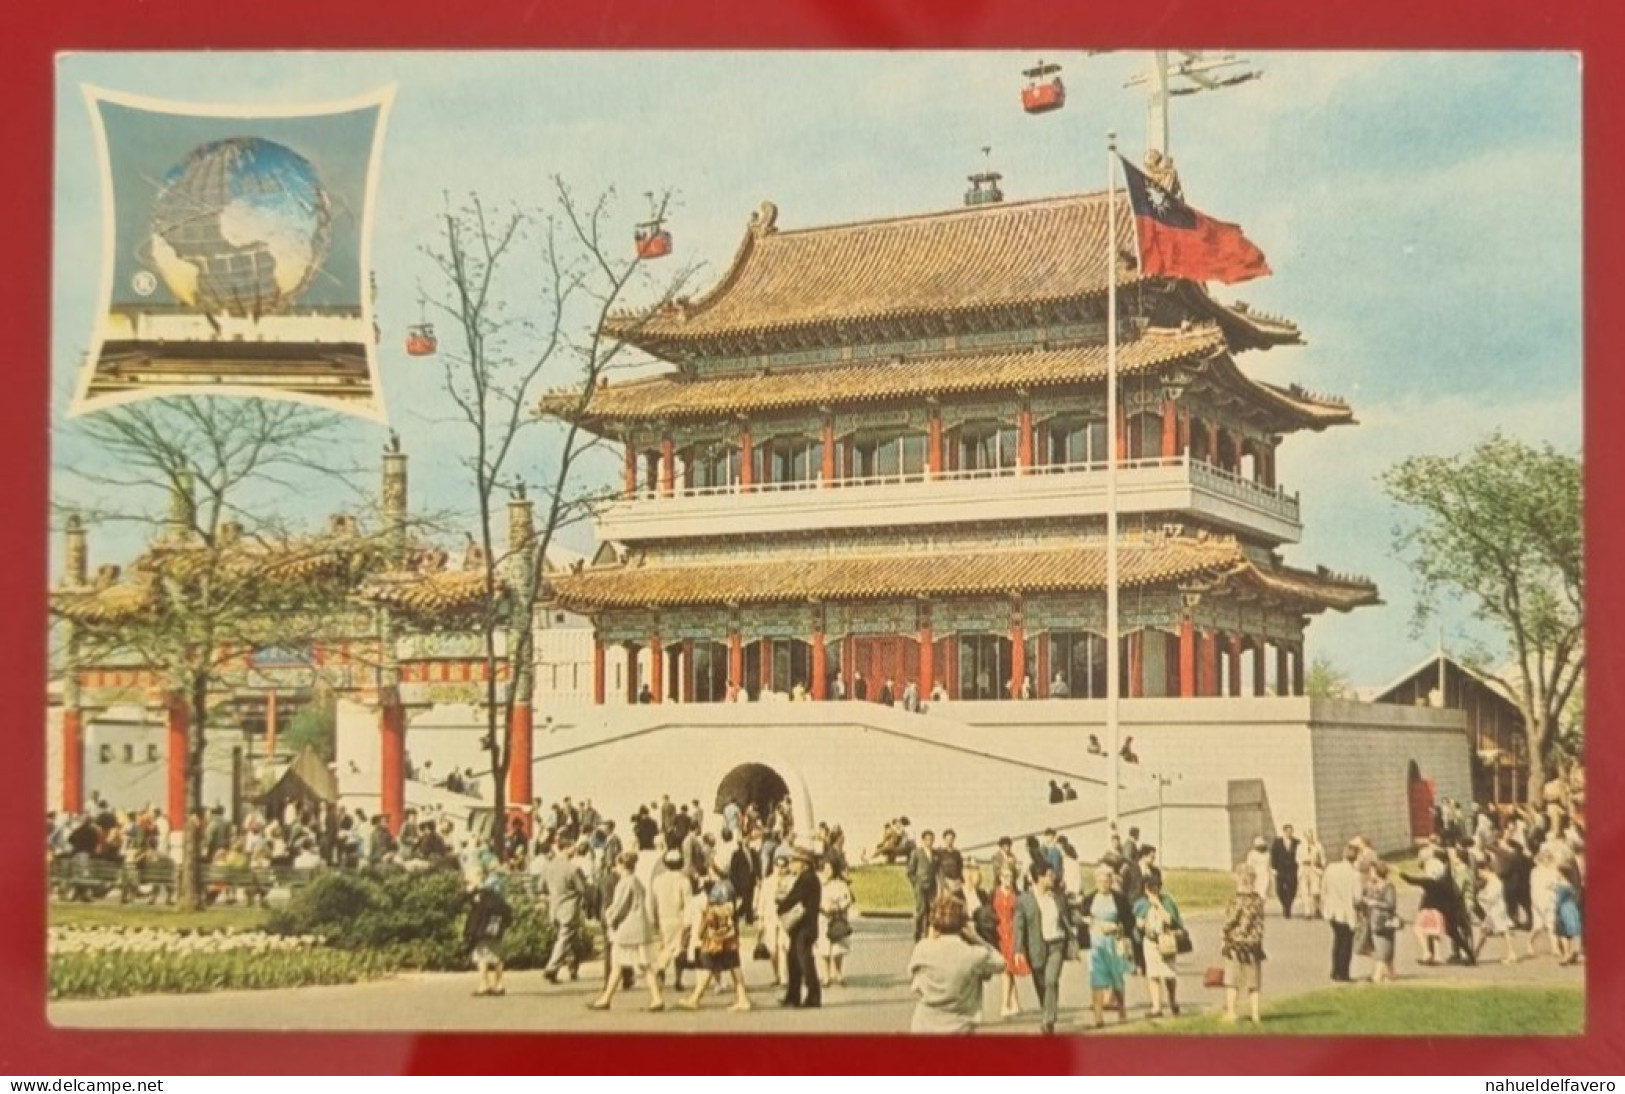 Uncirculated Postcard - USA - NY, NEW YORK WORLD'S FAIR 1964-65 - REPUBLICOF CHINA PAVILION - Tentoonstellingen